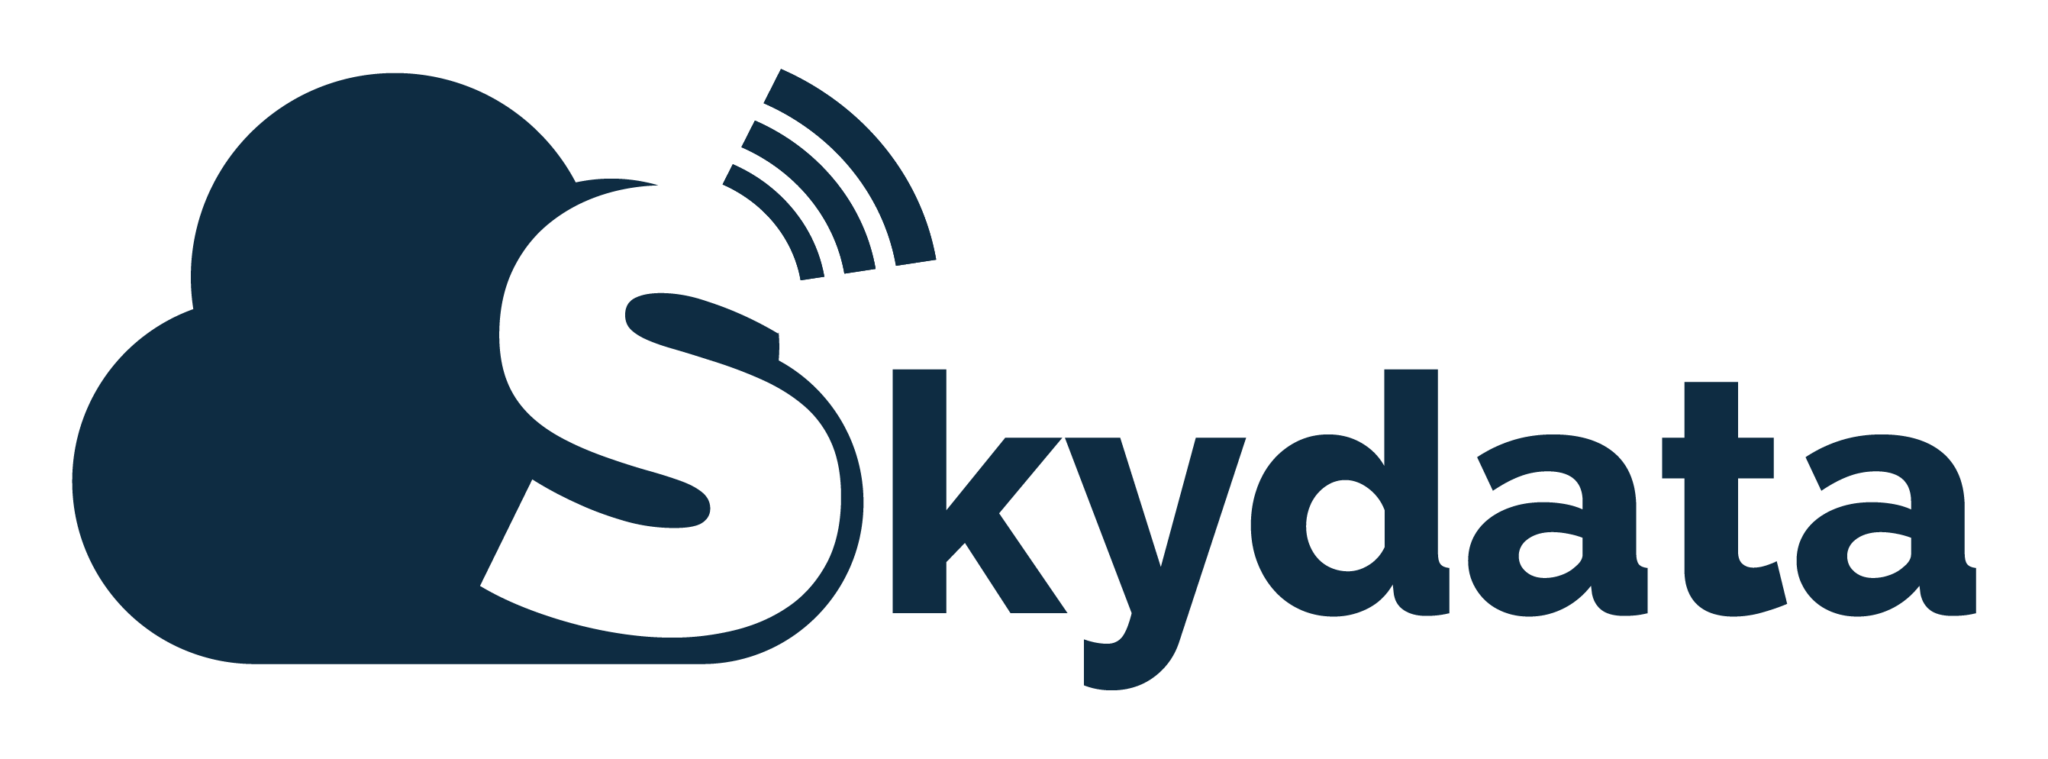 Skydata IOT